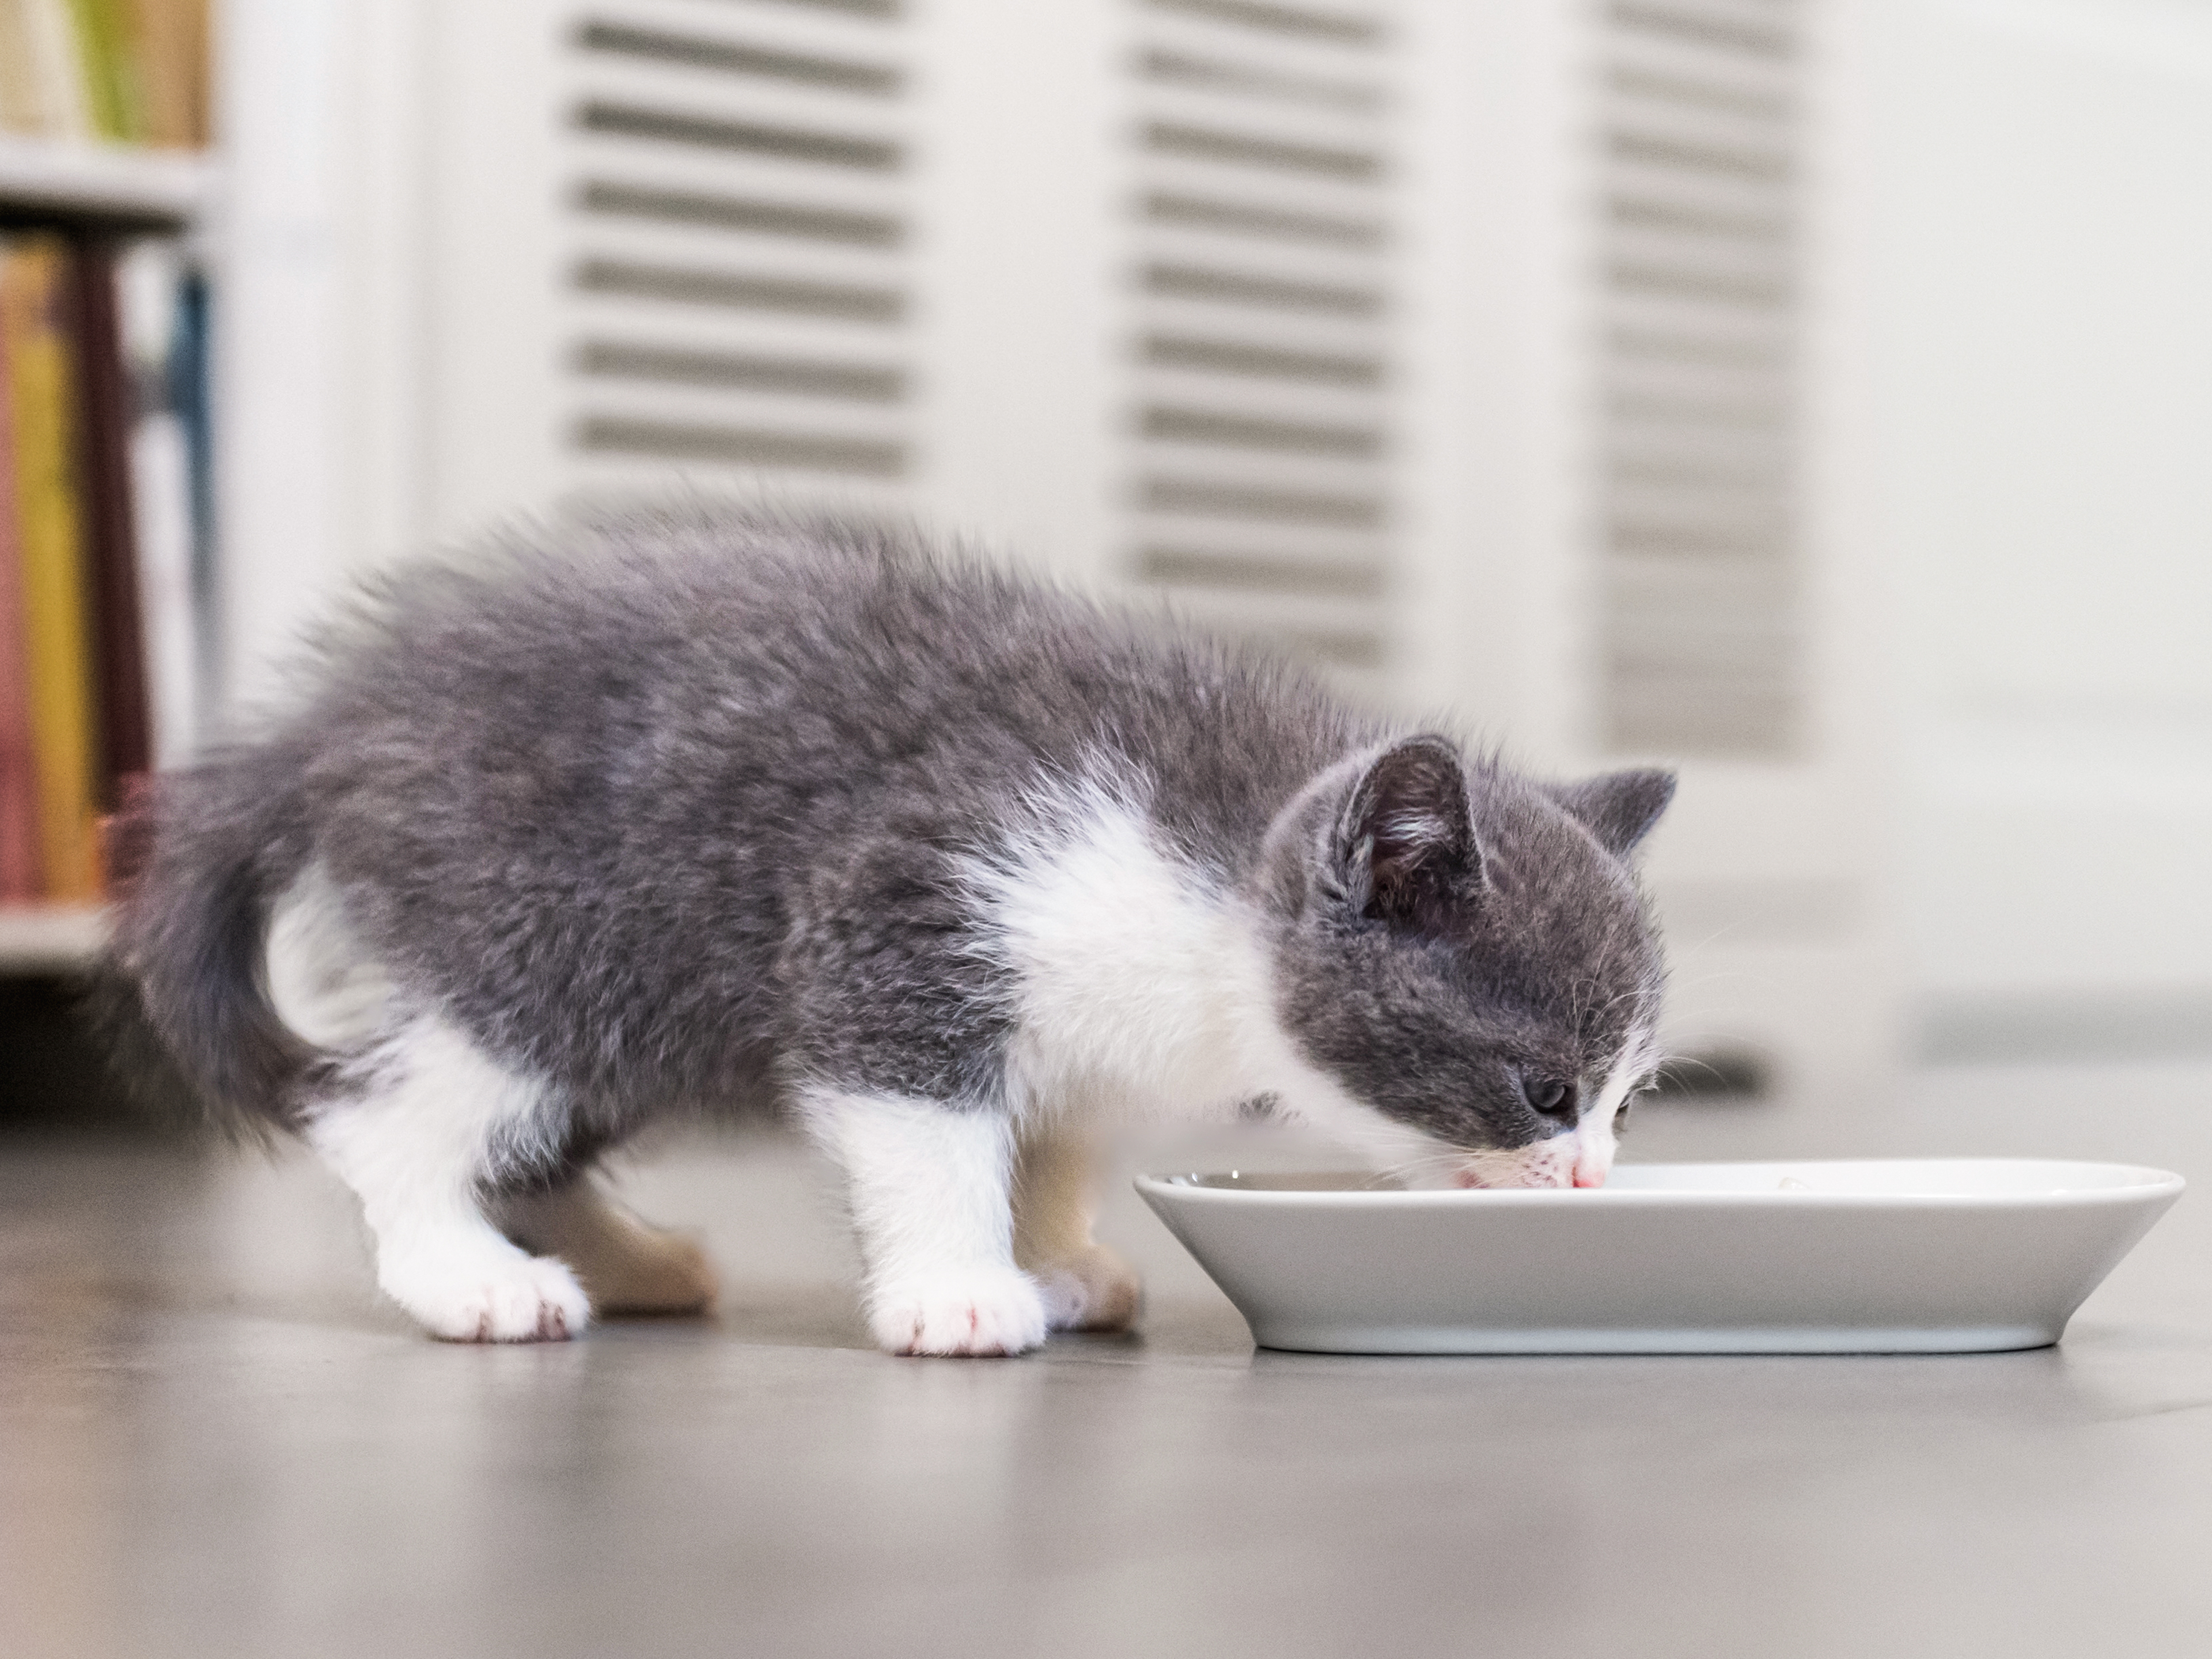 Grey and white kitten standing inside eating from a white feeding bowl